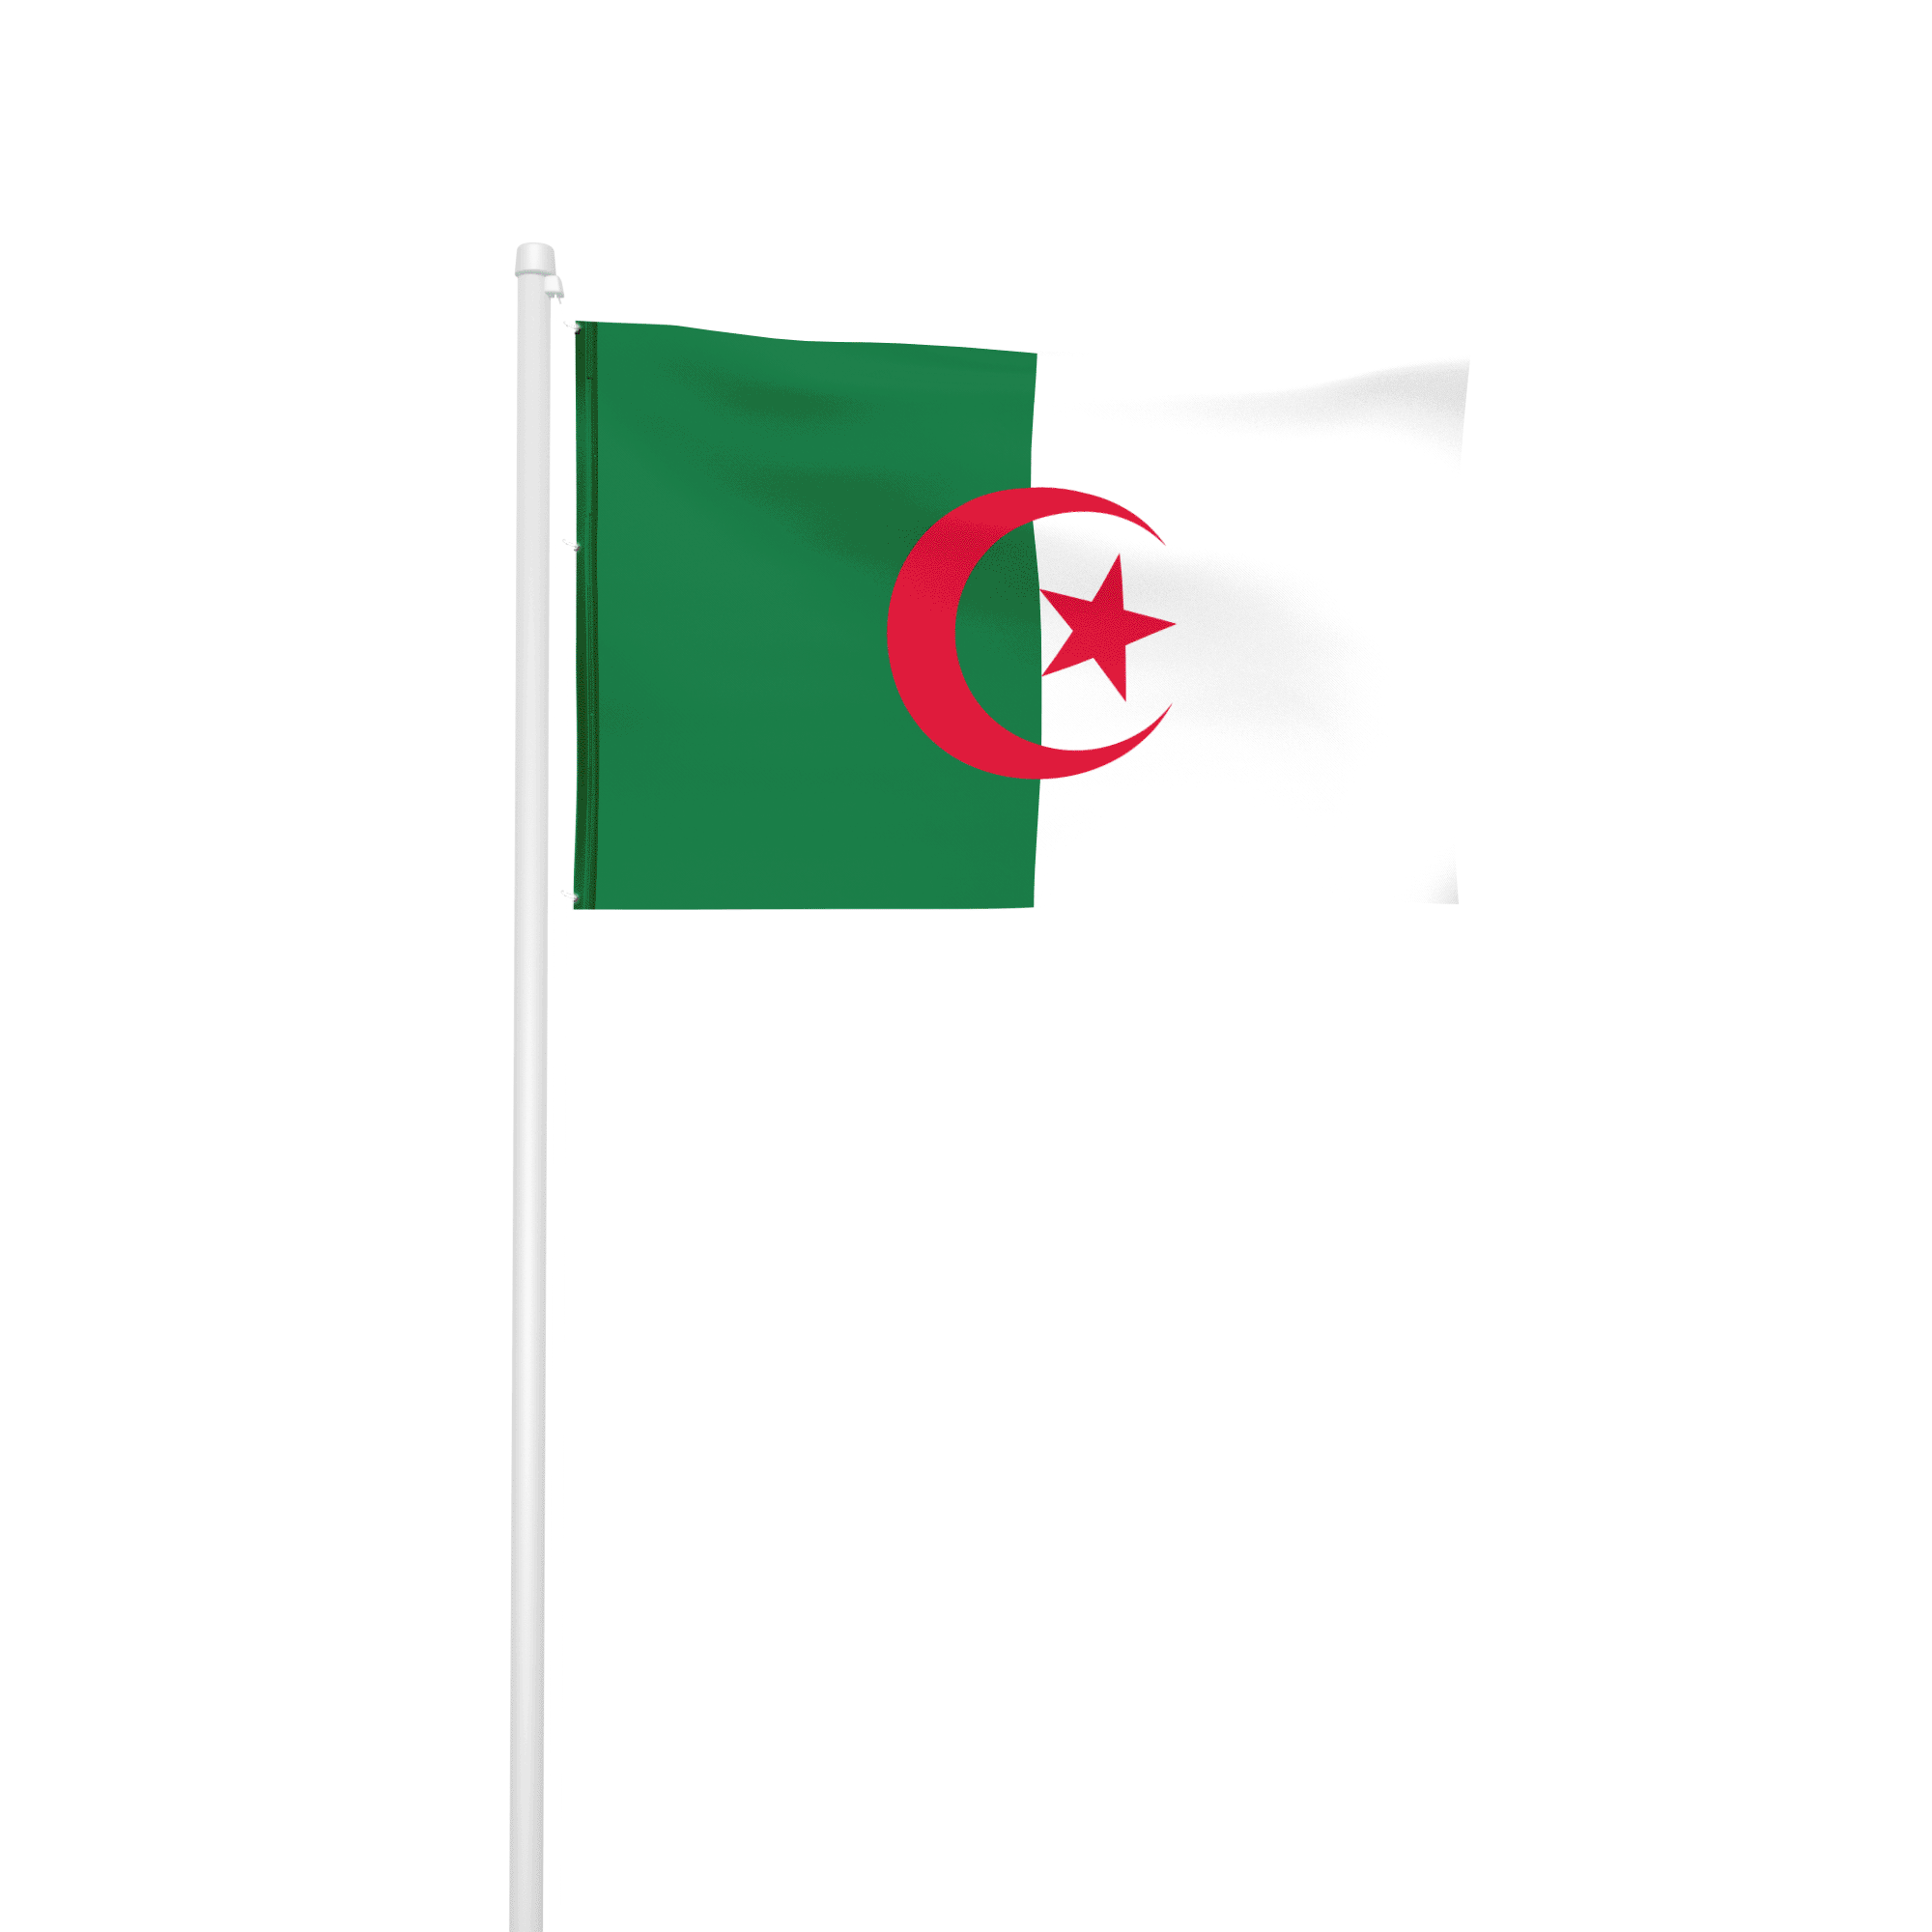 Algerien - Hissfahne